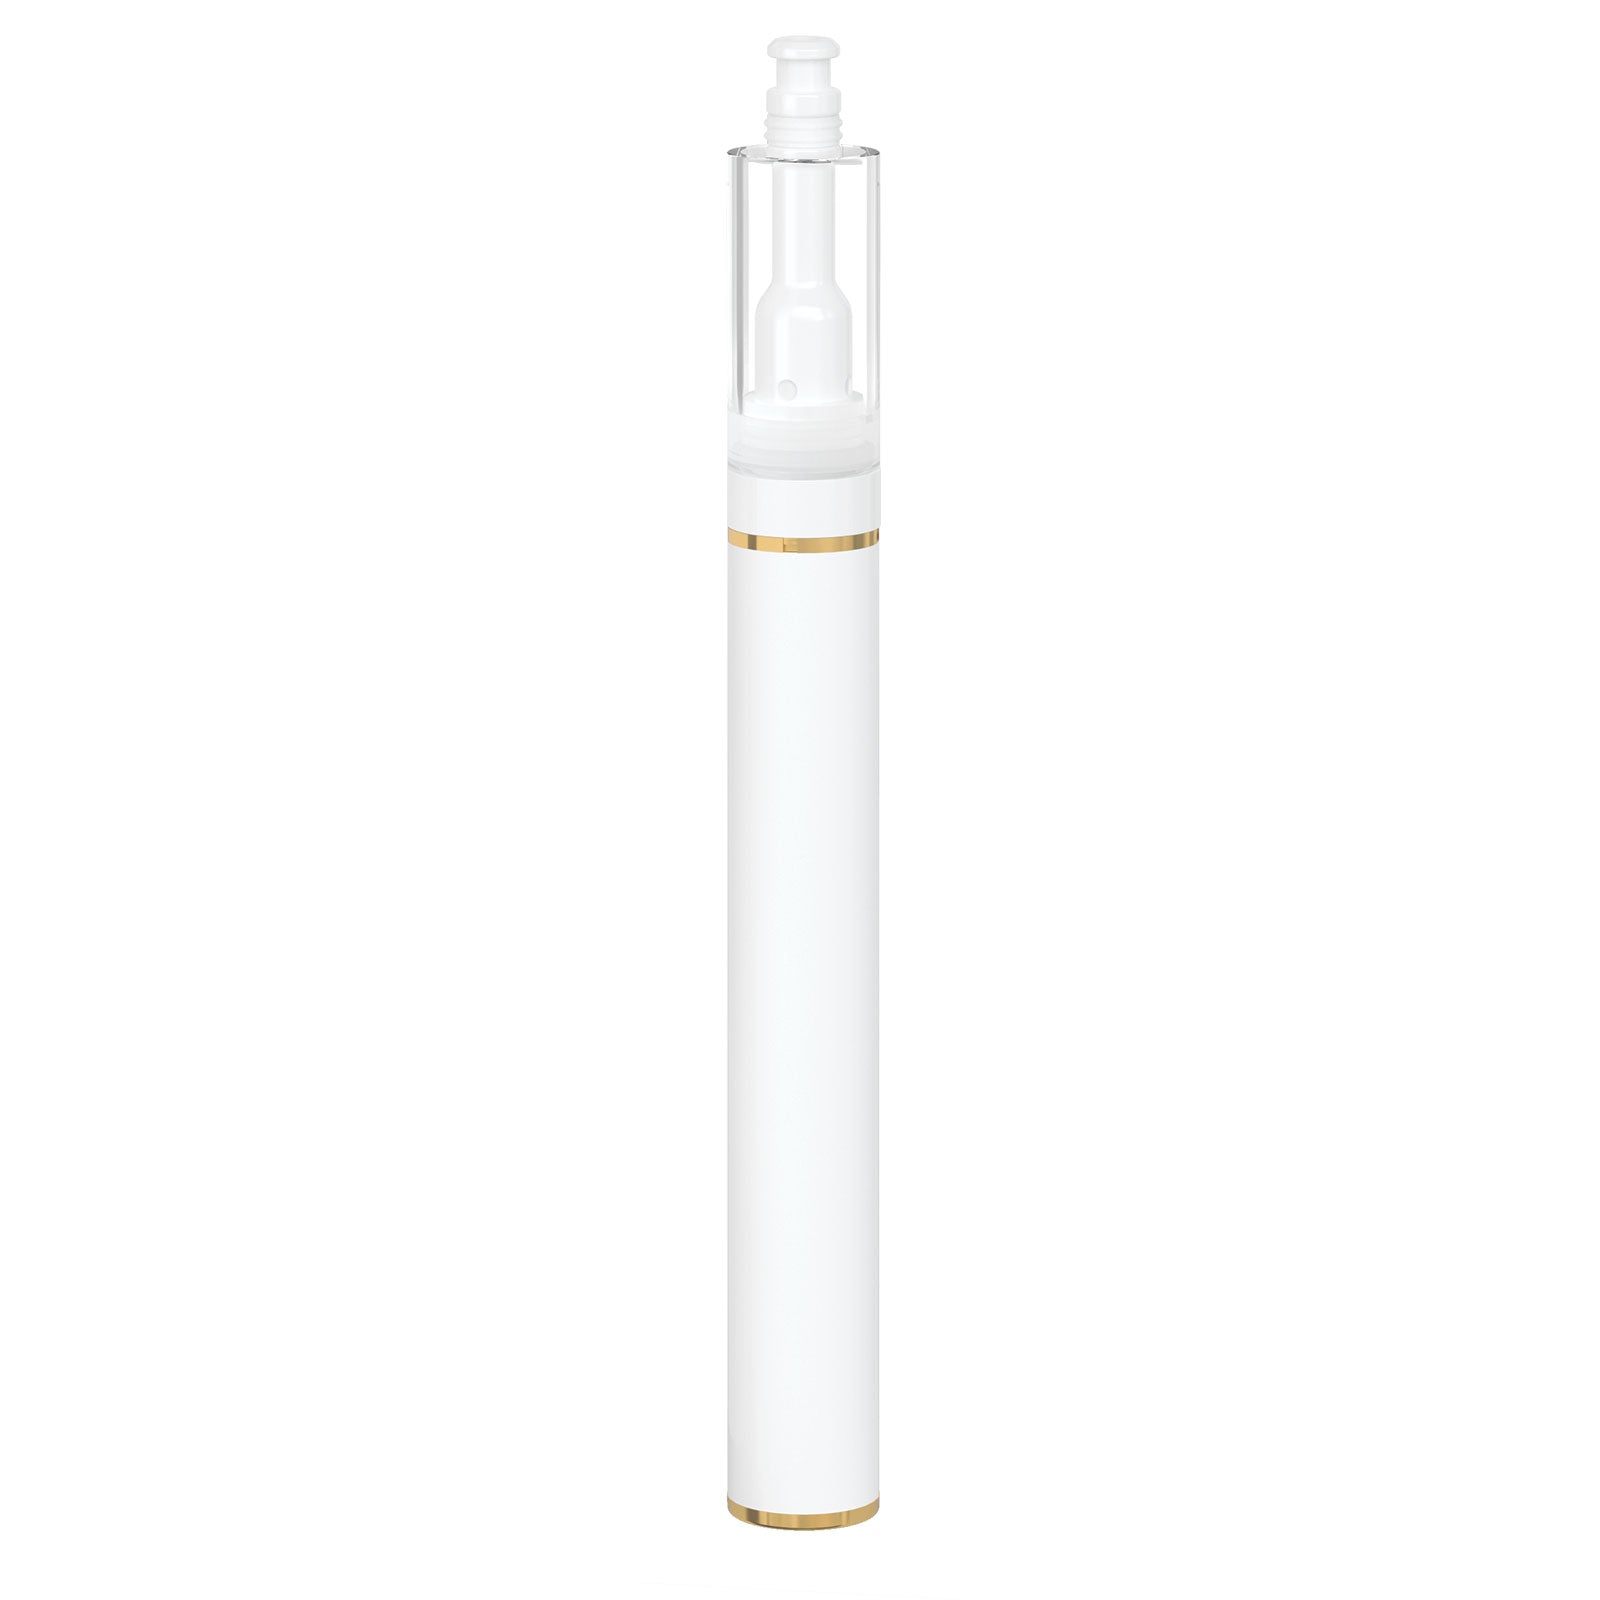 0.5ml / 1.7mm - Base (White) / Single Unit ACTIVE EZ Click Ceramic Pro All in One Disposable Vape